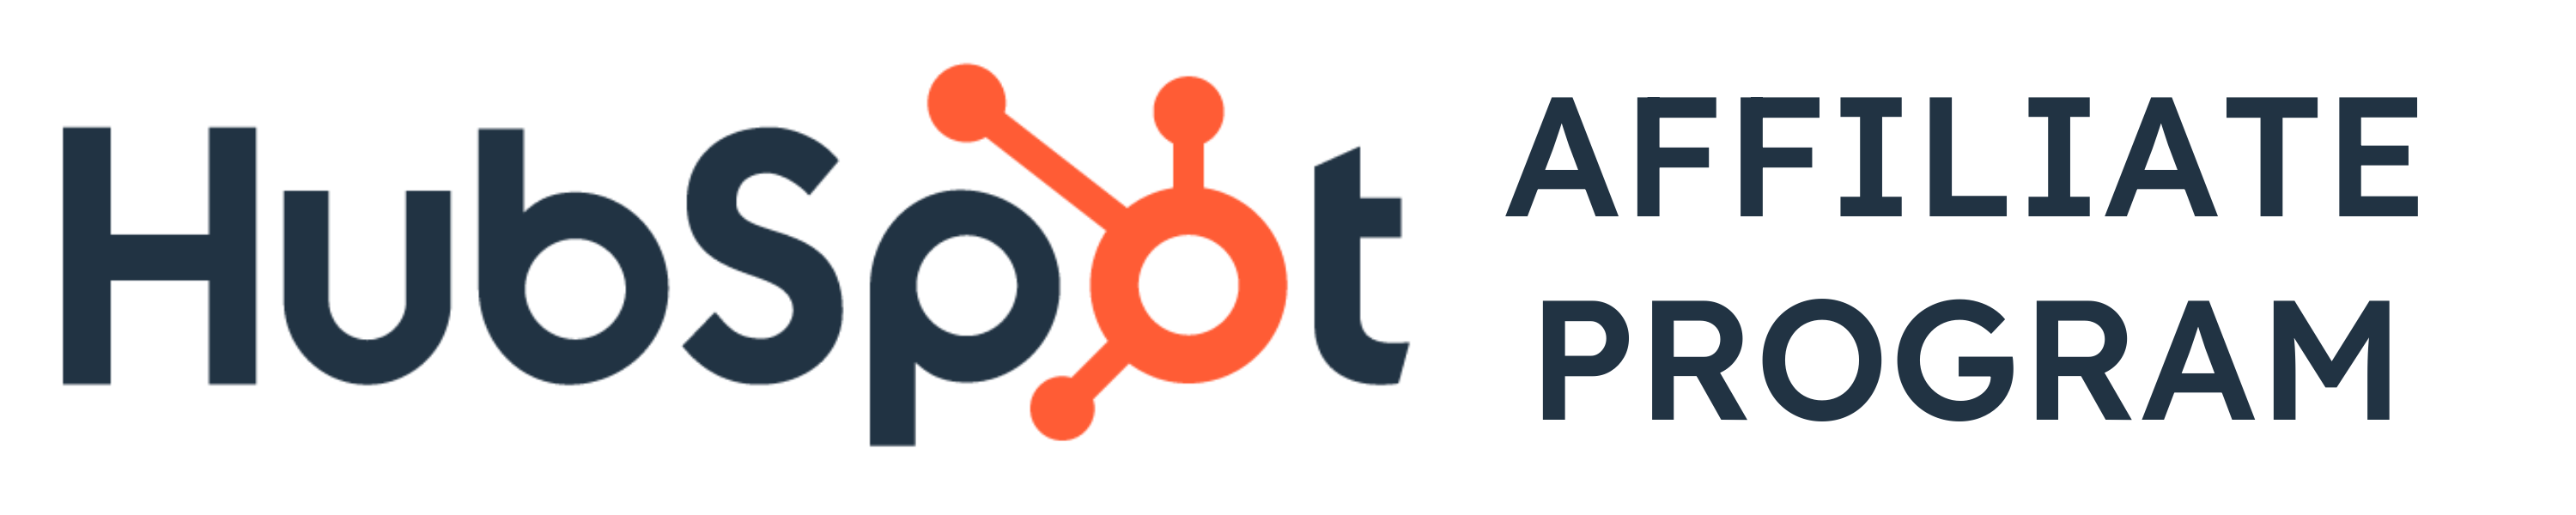 HubSpot Affiliate Program Logo